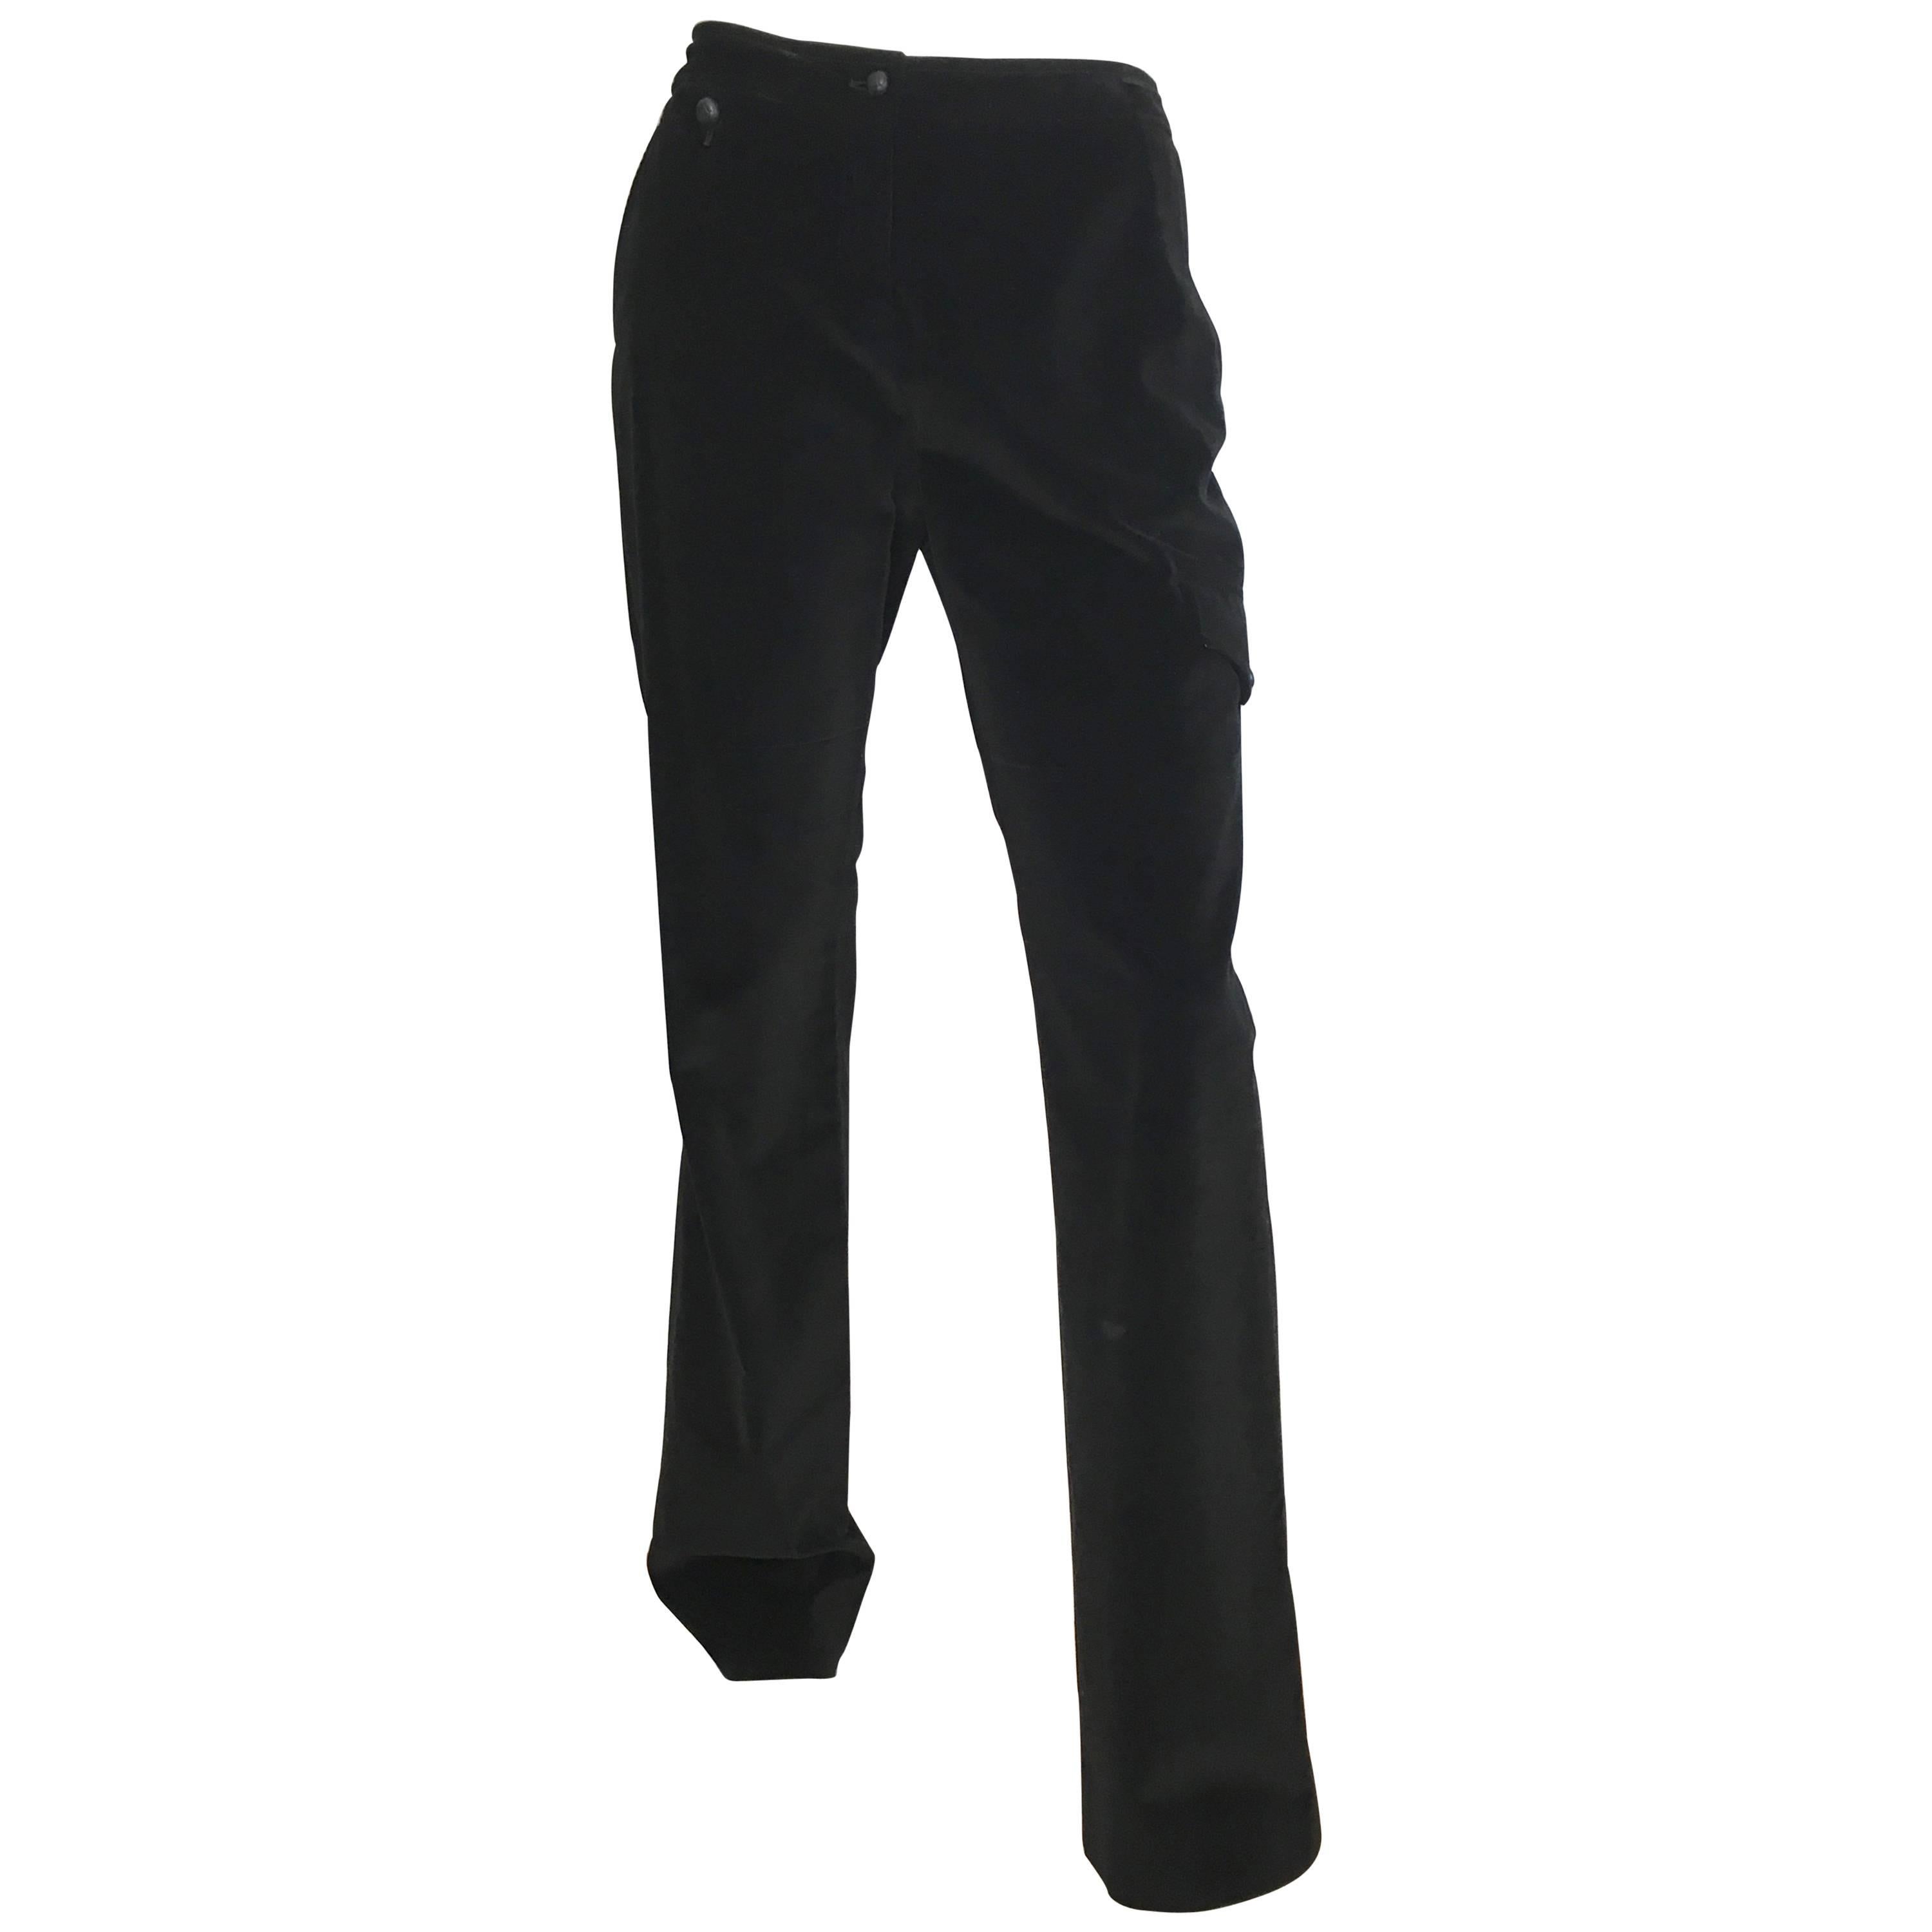 Yves Saint Laurent Rive Gauche Black Velvet Cargo Pants with Pockets Size 6.